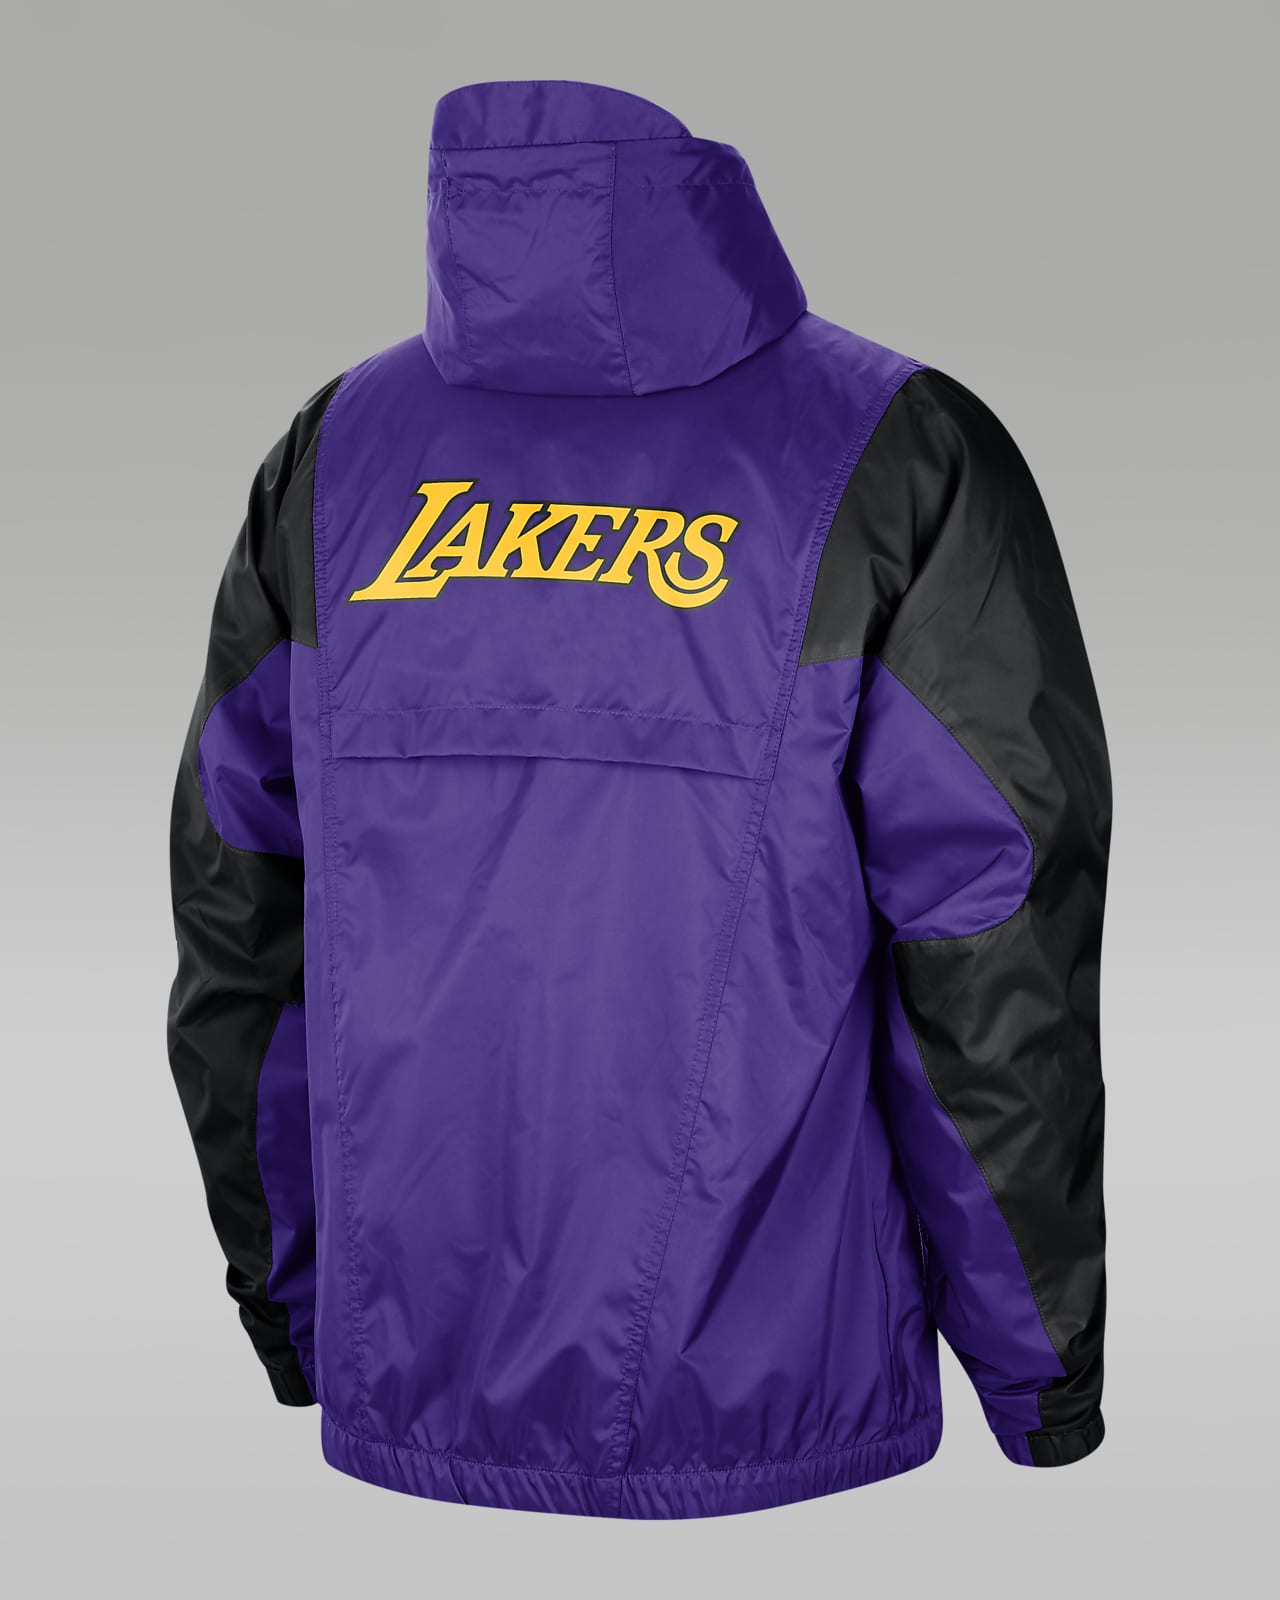 Los Angeles Lakers Courtside Statement Men's Jordan NBA Jacket.